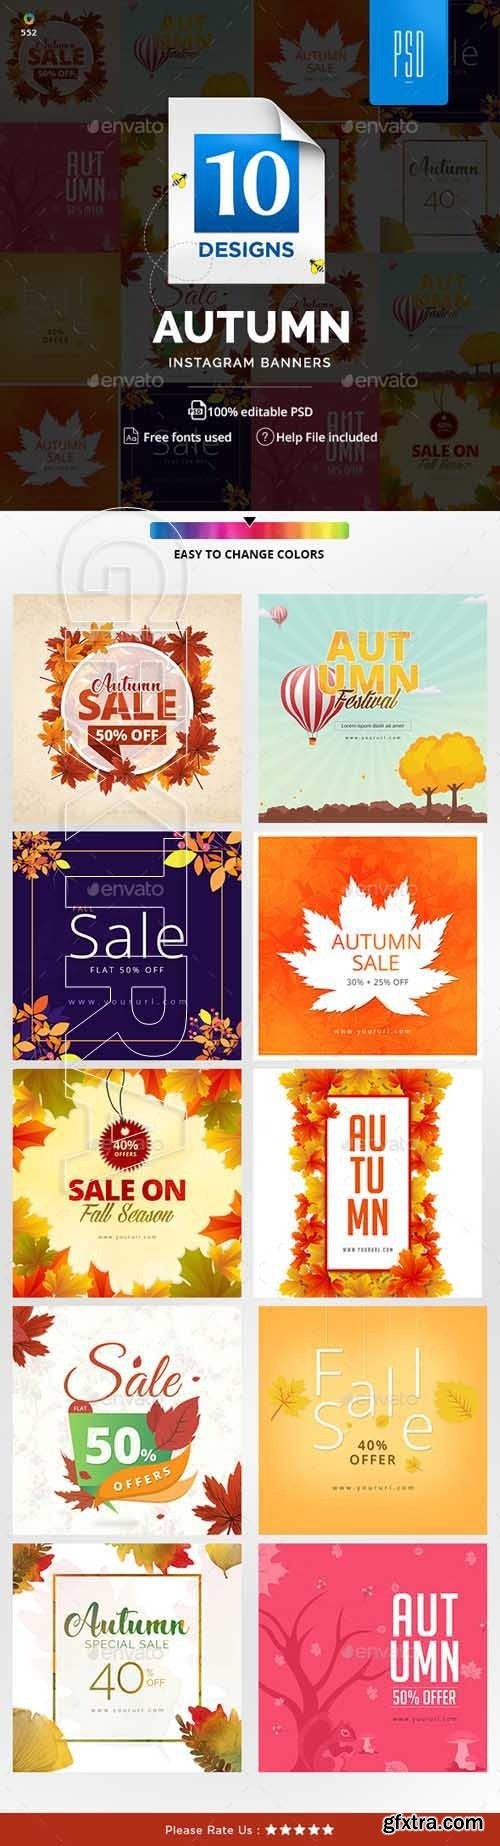 GraphicRiver - Autumn Sale Instagram Templates 20593121